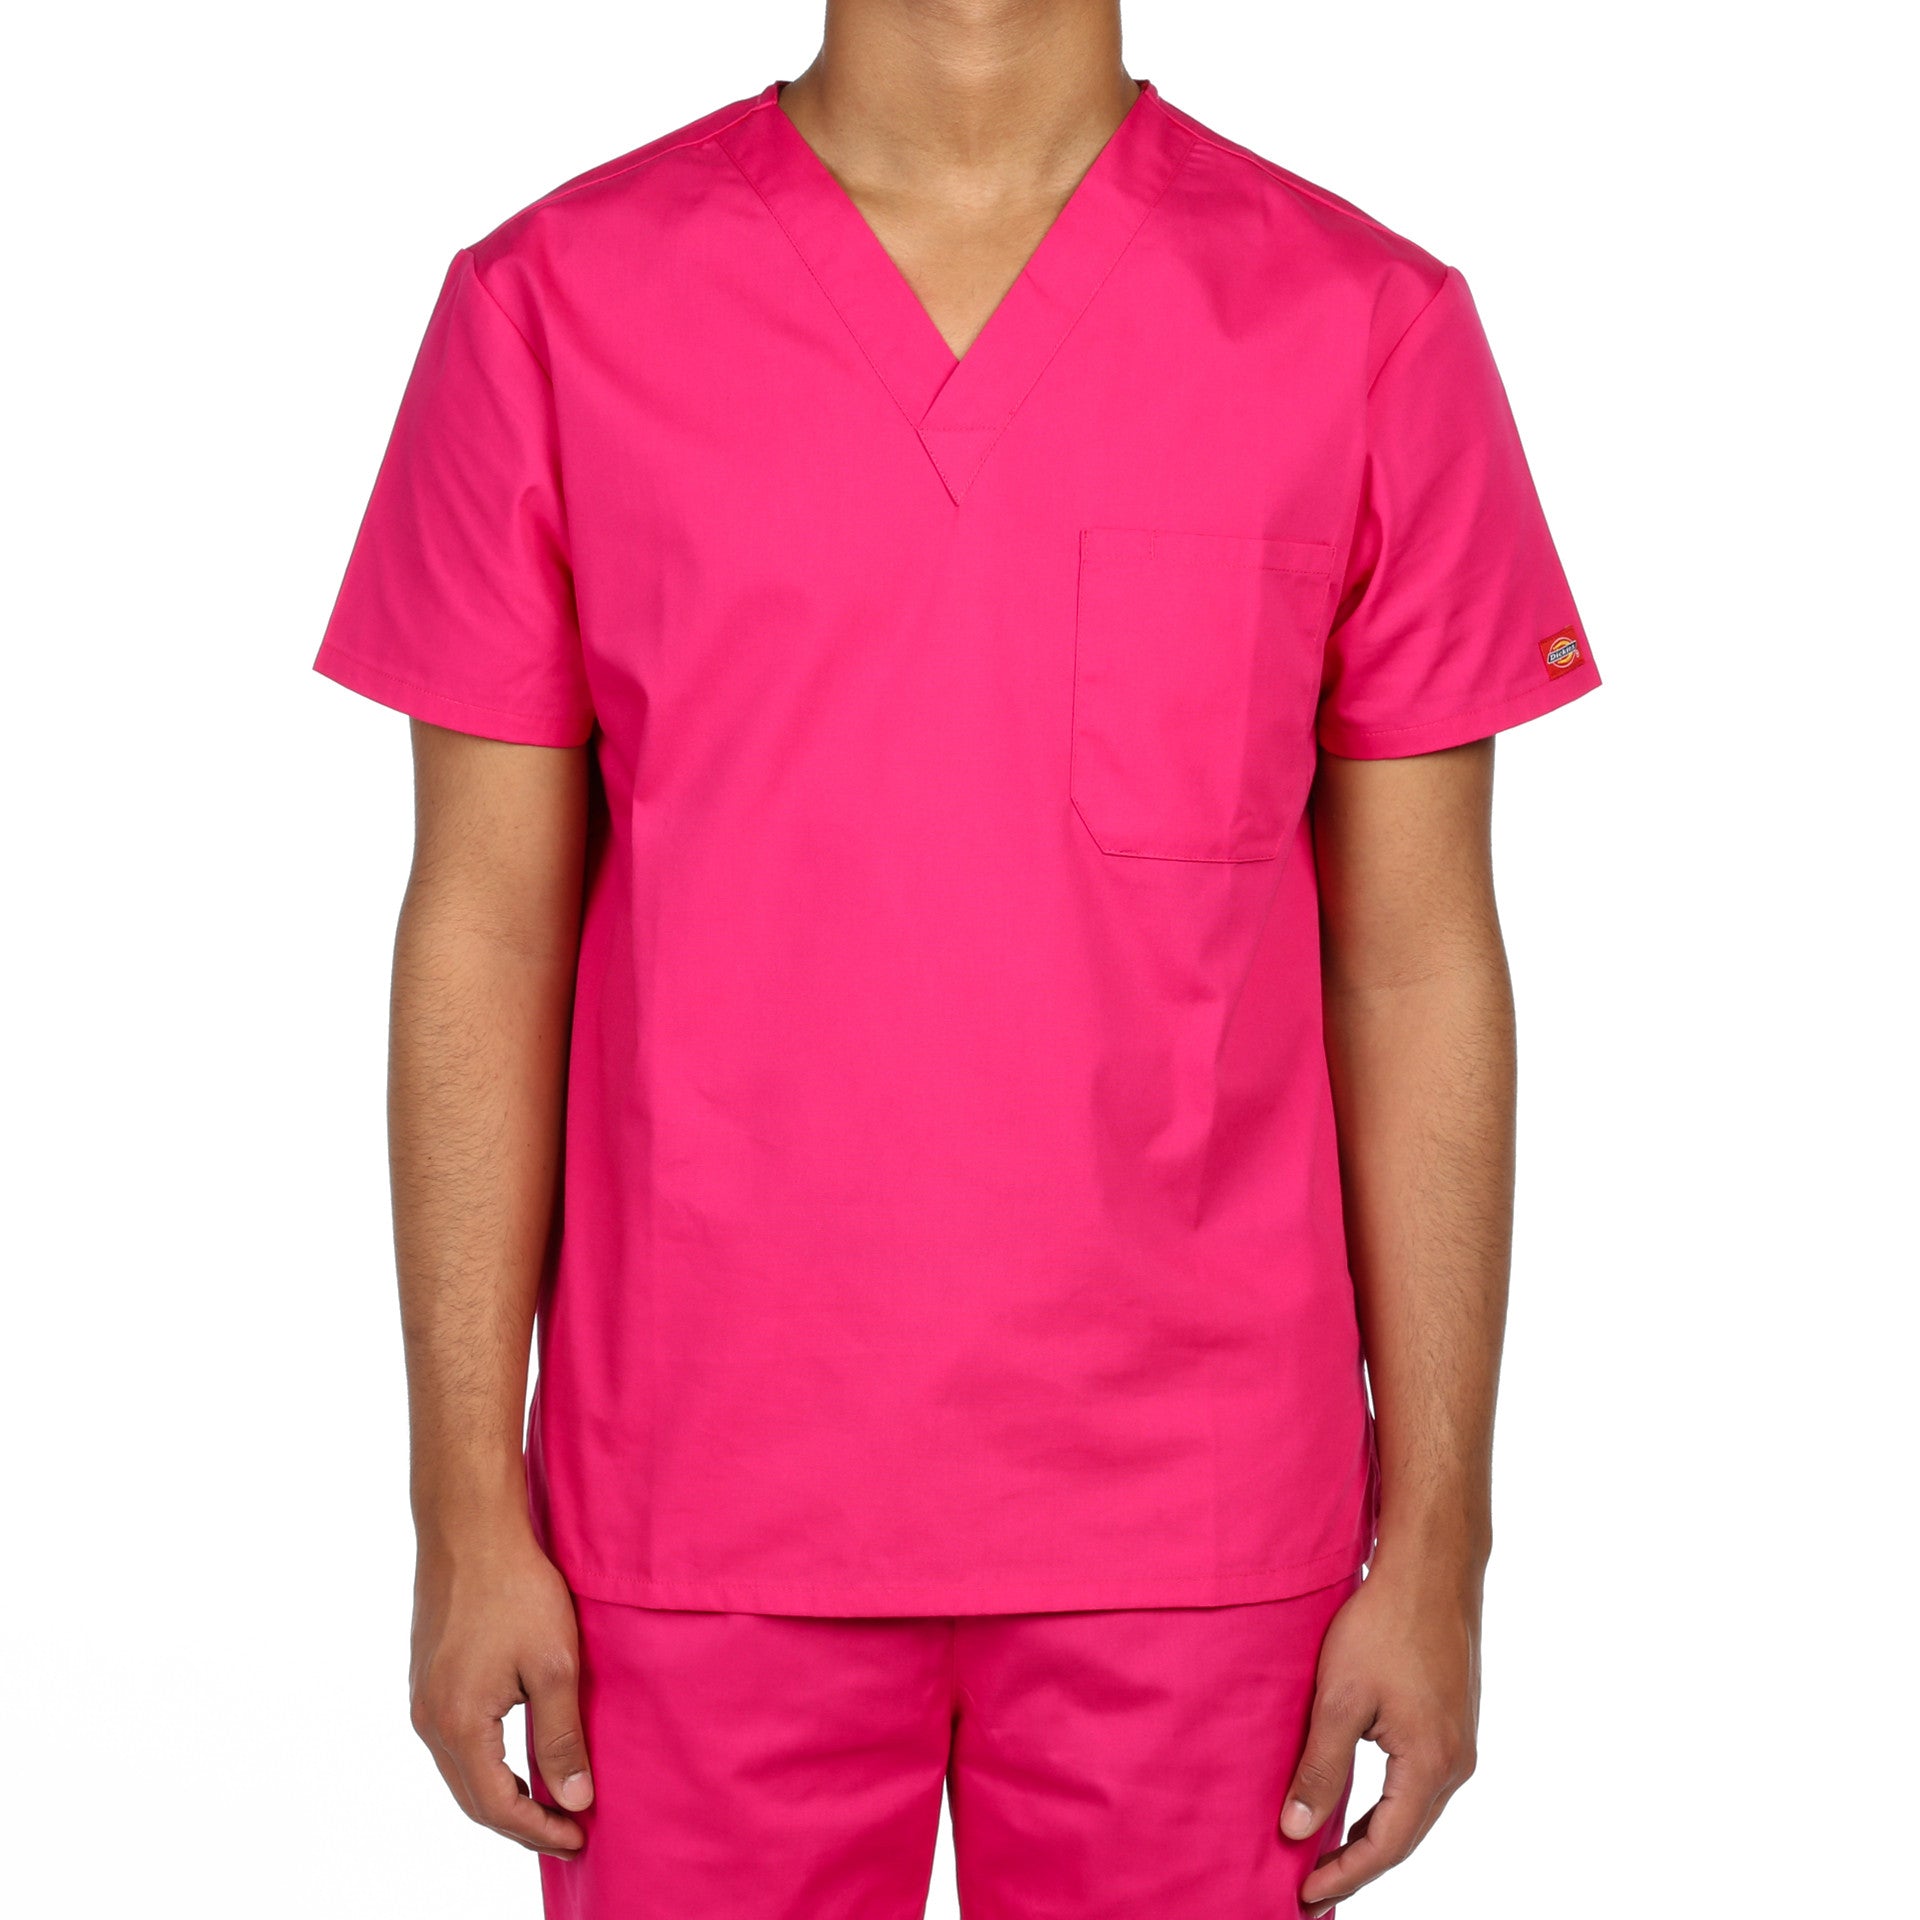  Mens Scrubs Tops with Design Pink Scrubs Scrub Jacket